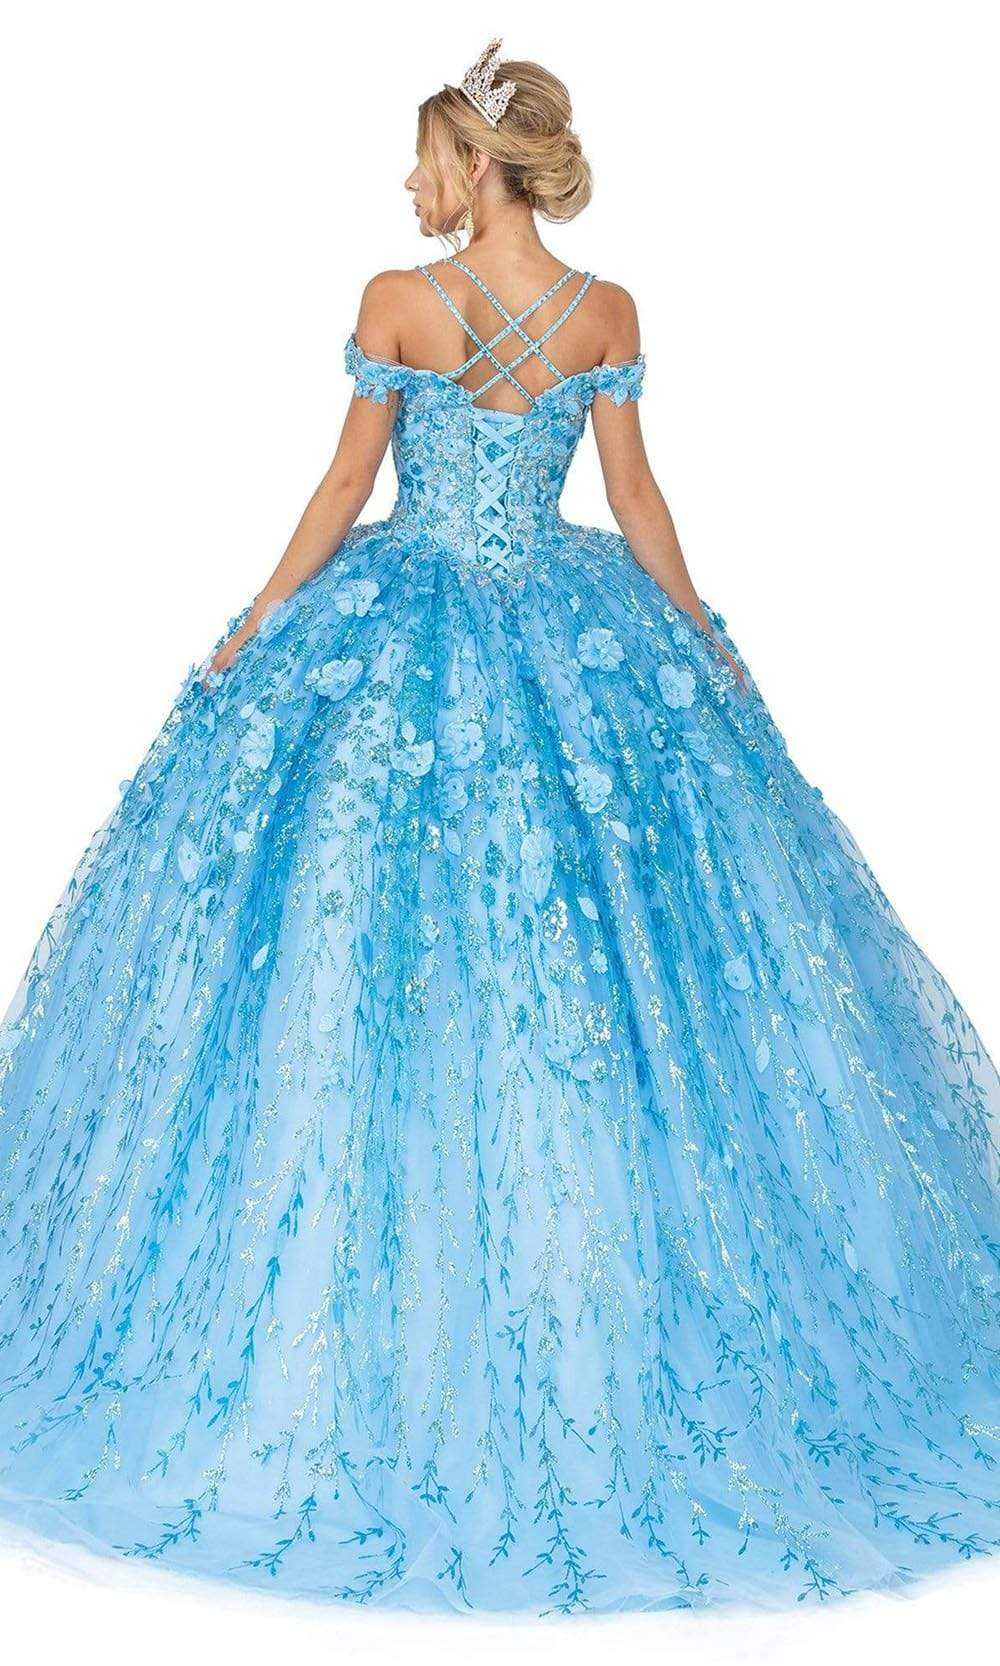 Dancing Queen, Dancing Queen - 1640 3D Floral Applique Corset Lace-Up Back Ballgown